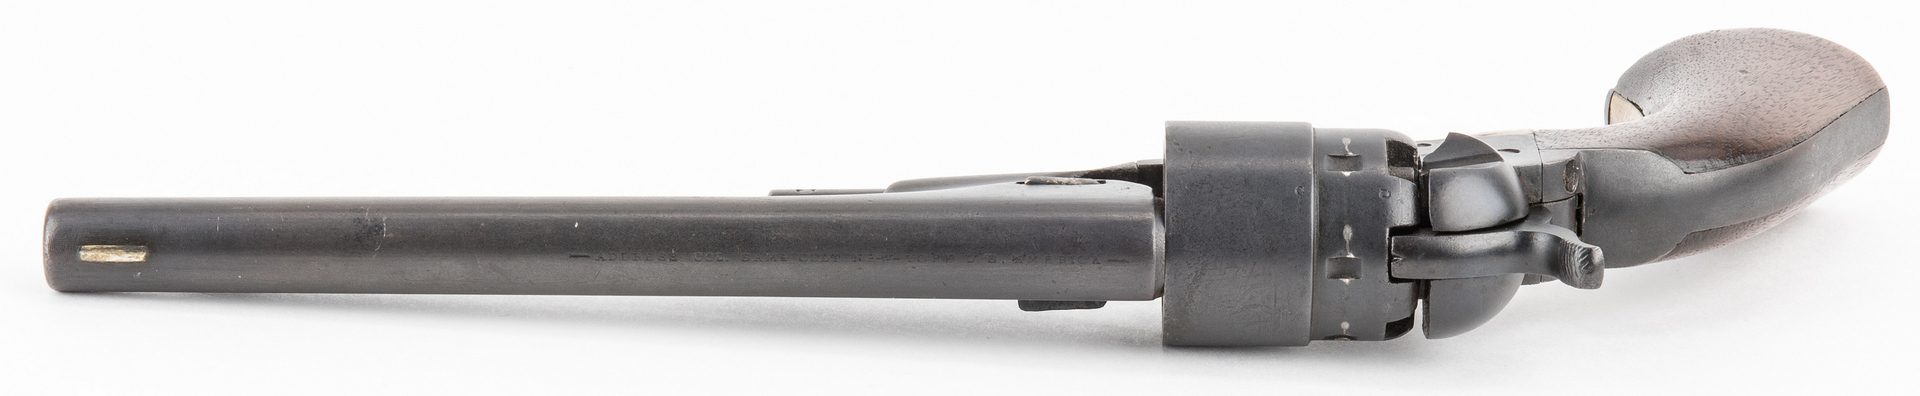 Lot 778: Mismatched Colt Model 1860 Army Revolver, .44 Caliber